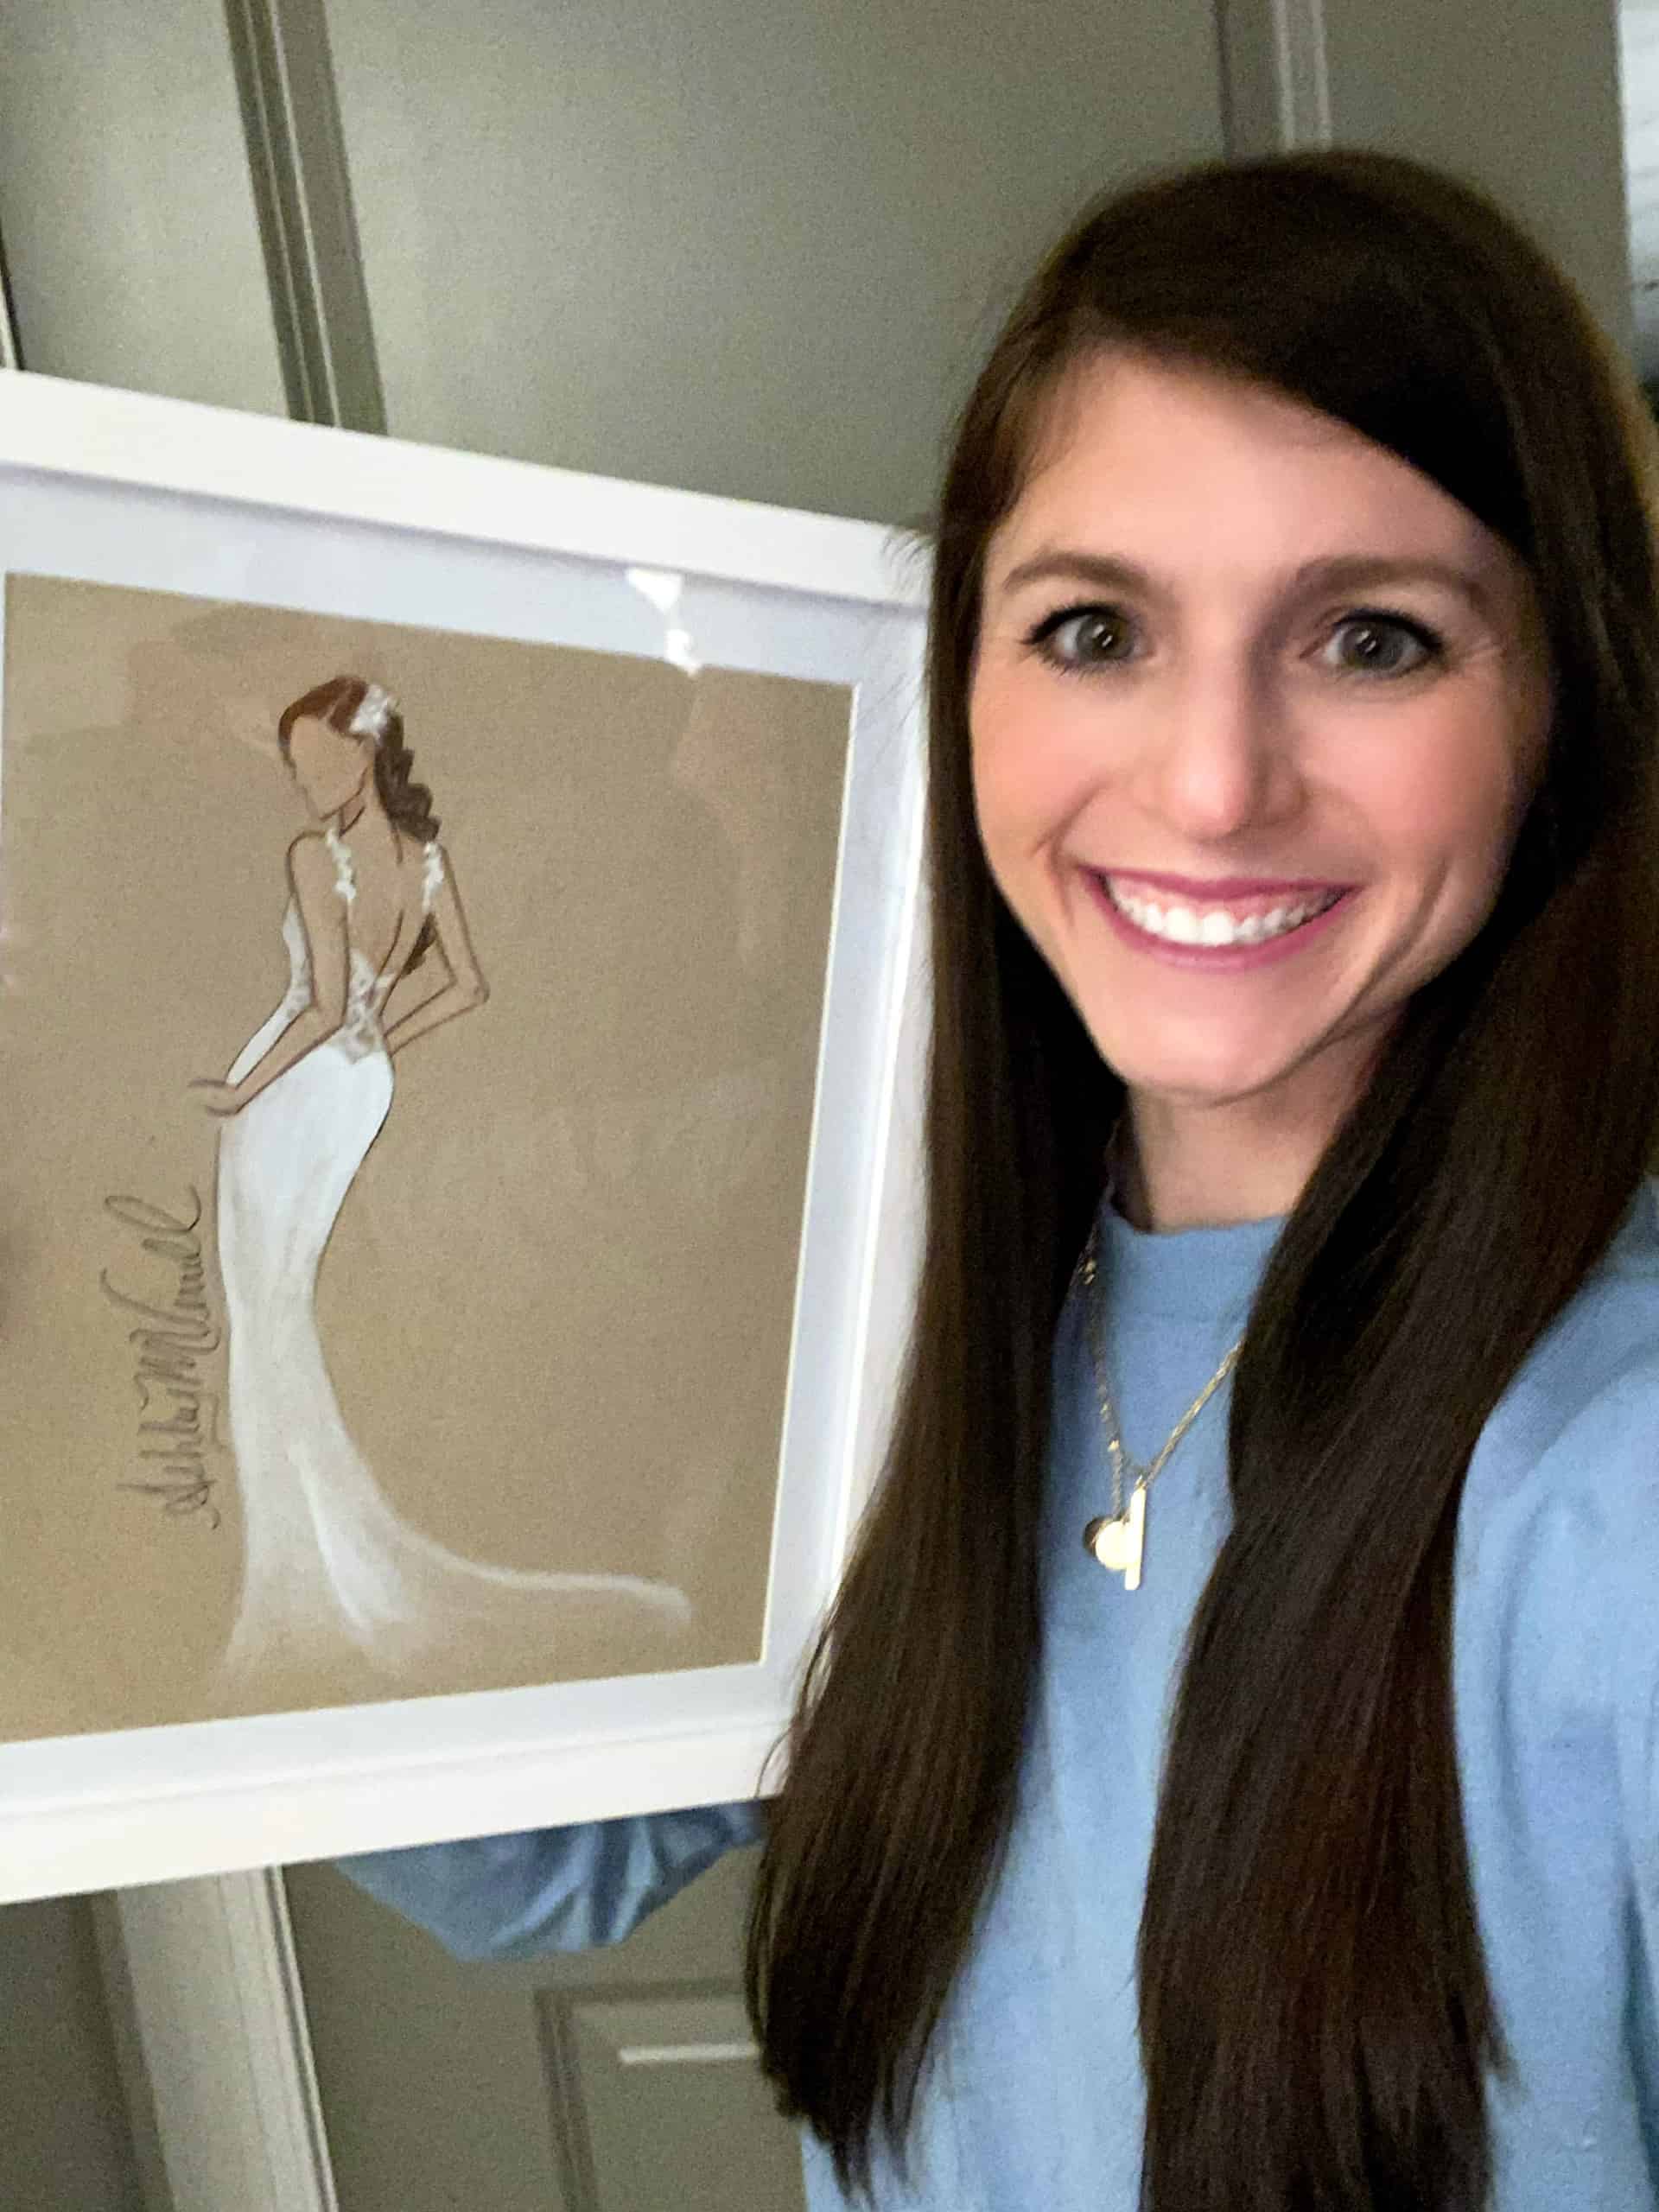 Bride Holding Wedding Gift of Wedding Dress Artwork